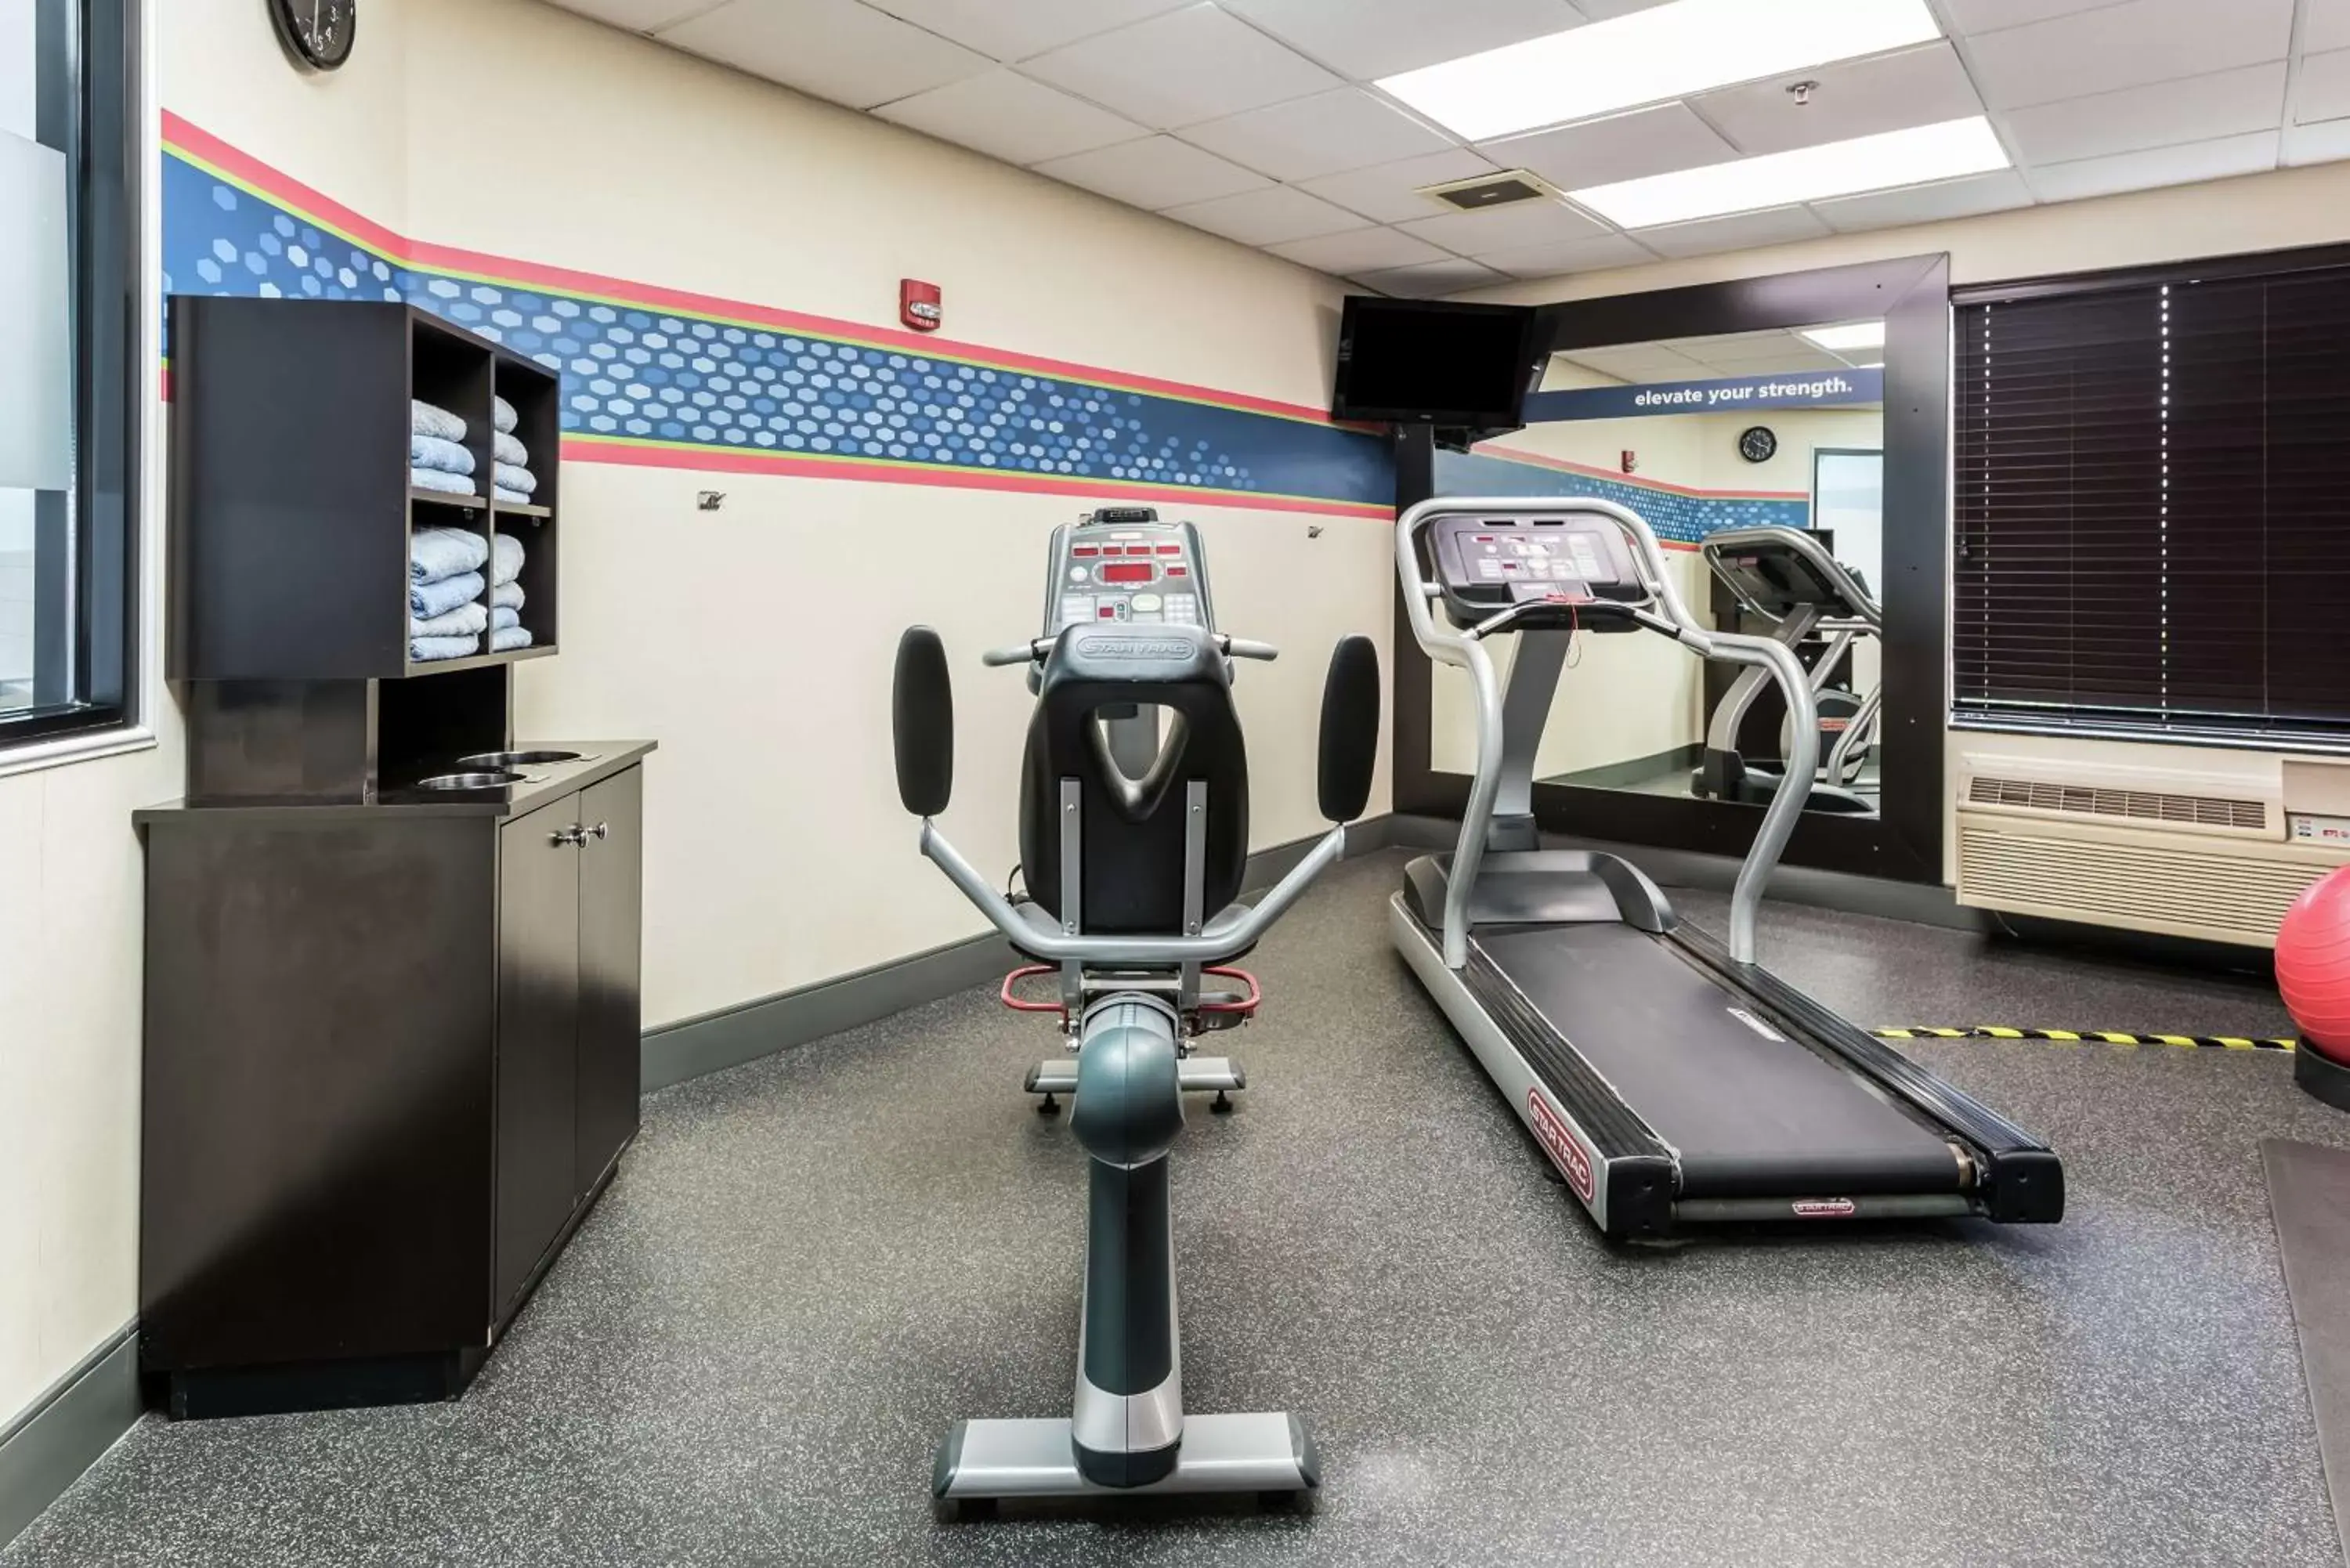 Fitness centre/facilities, Fitness Center/Facilities in Hampton Inn Columbus I-70E/Hamilton Road